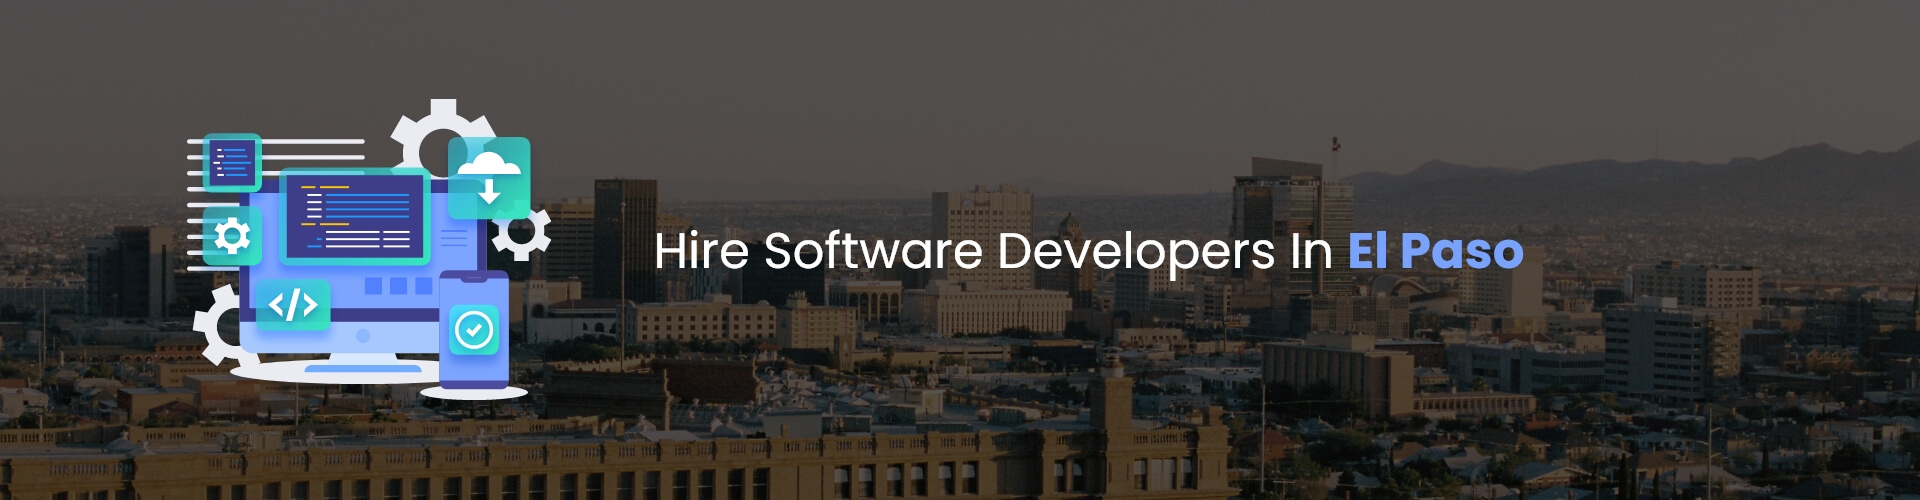 hire software developers in el paso